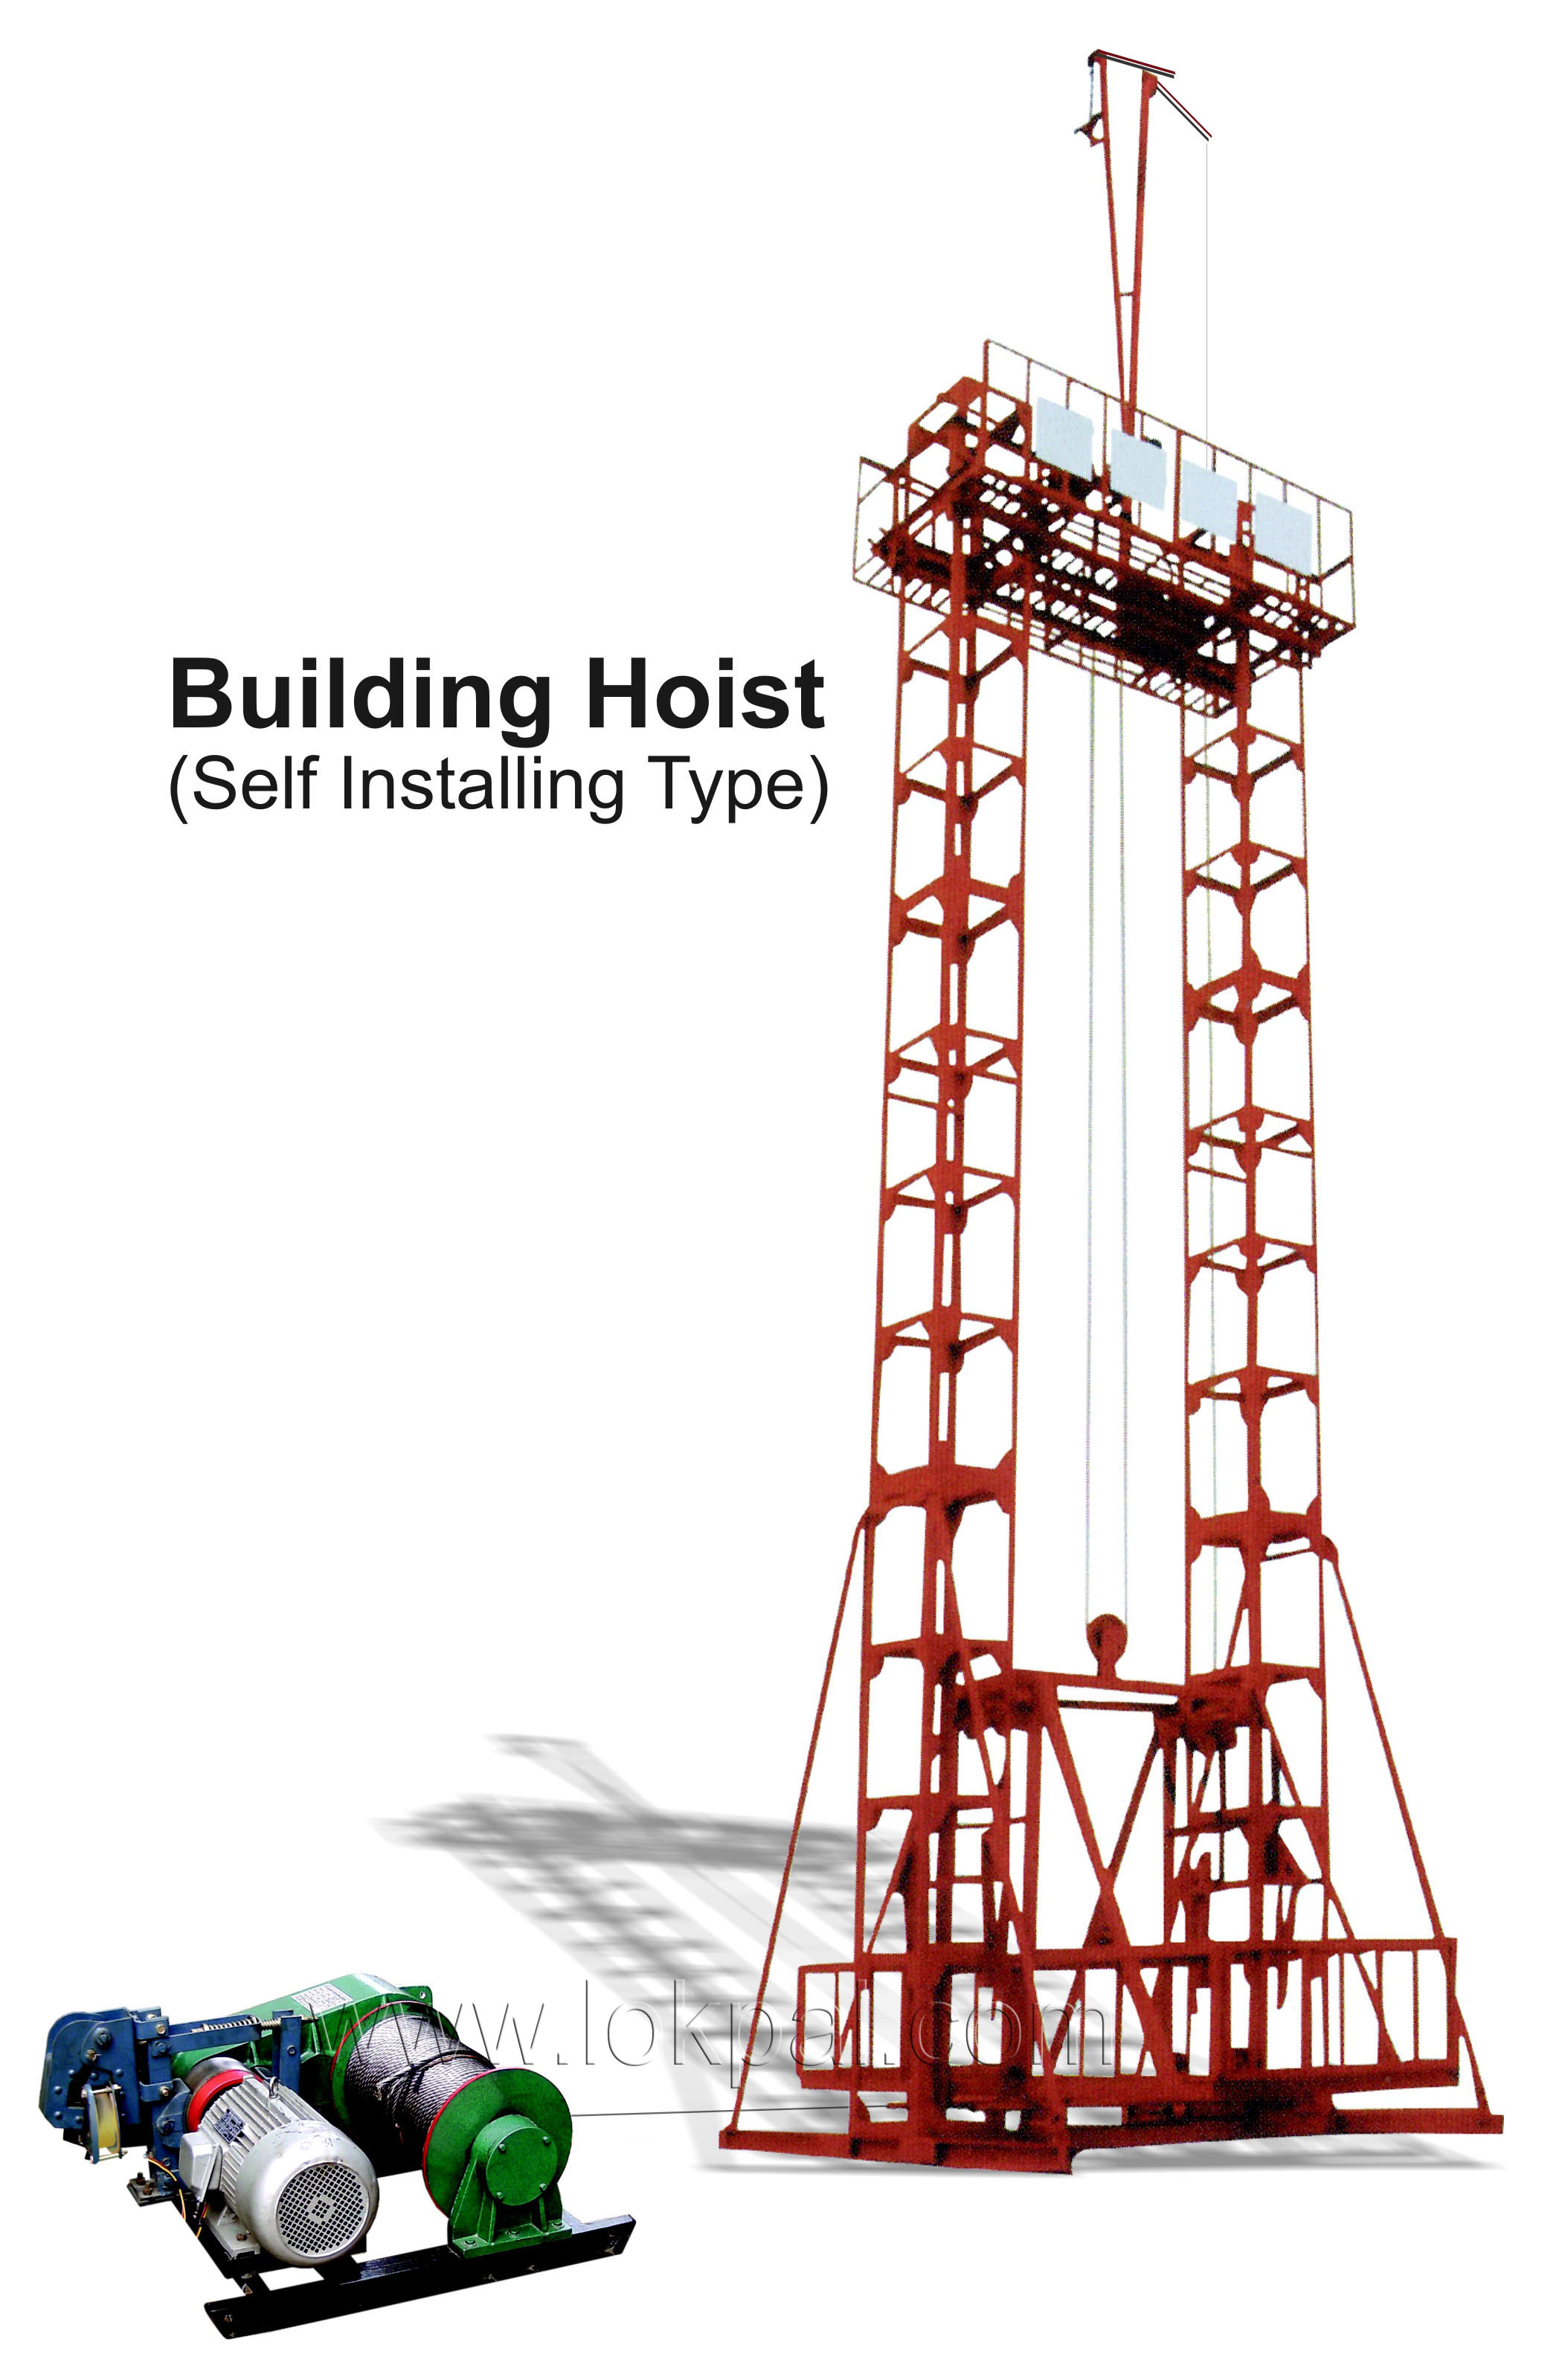 Building Hoist